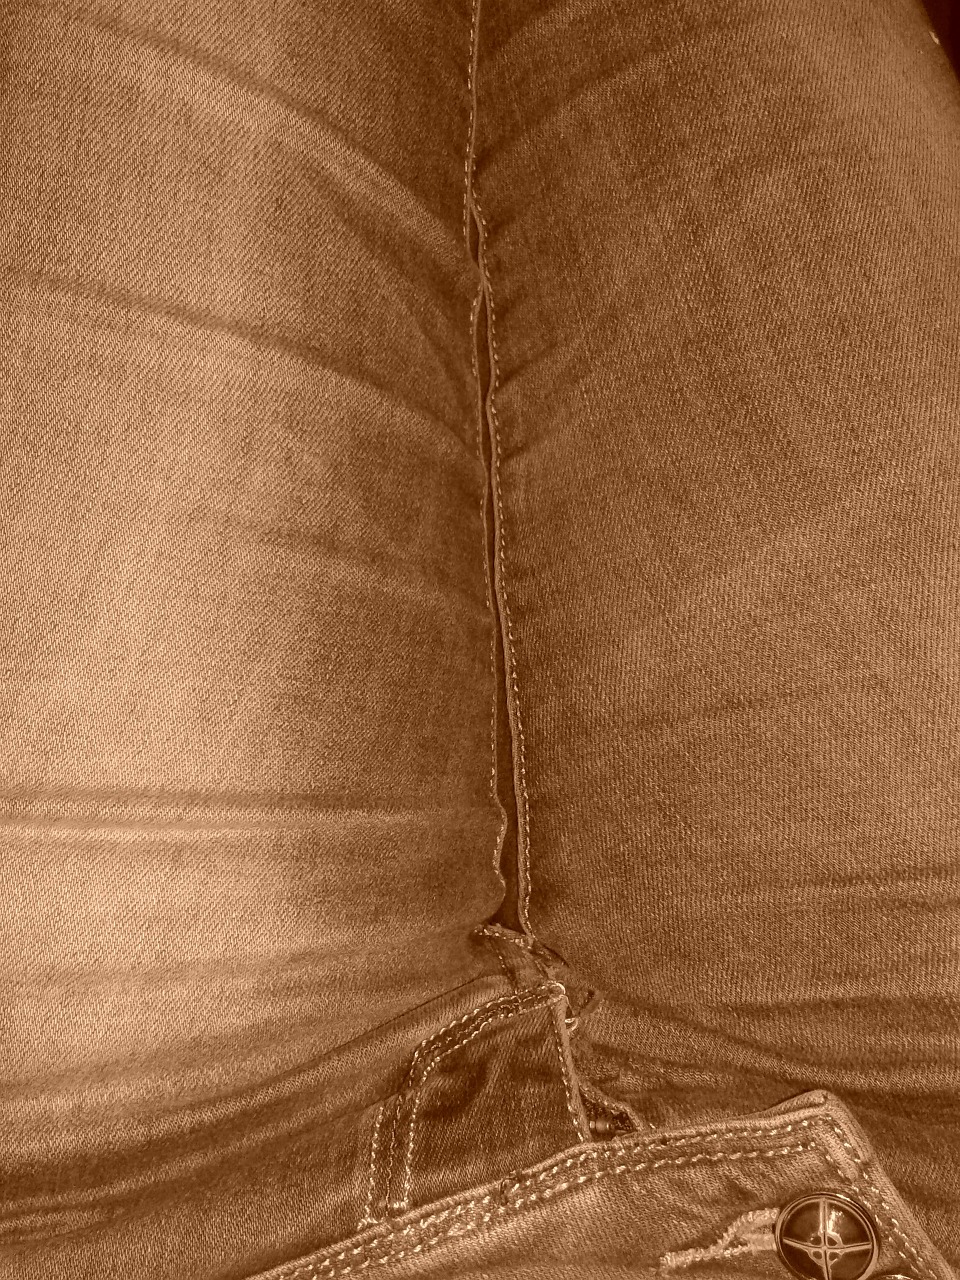 jeans feet thigh free photo